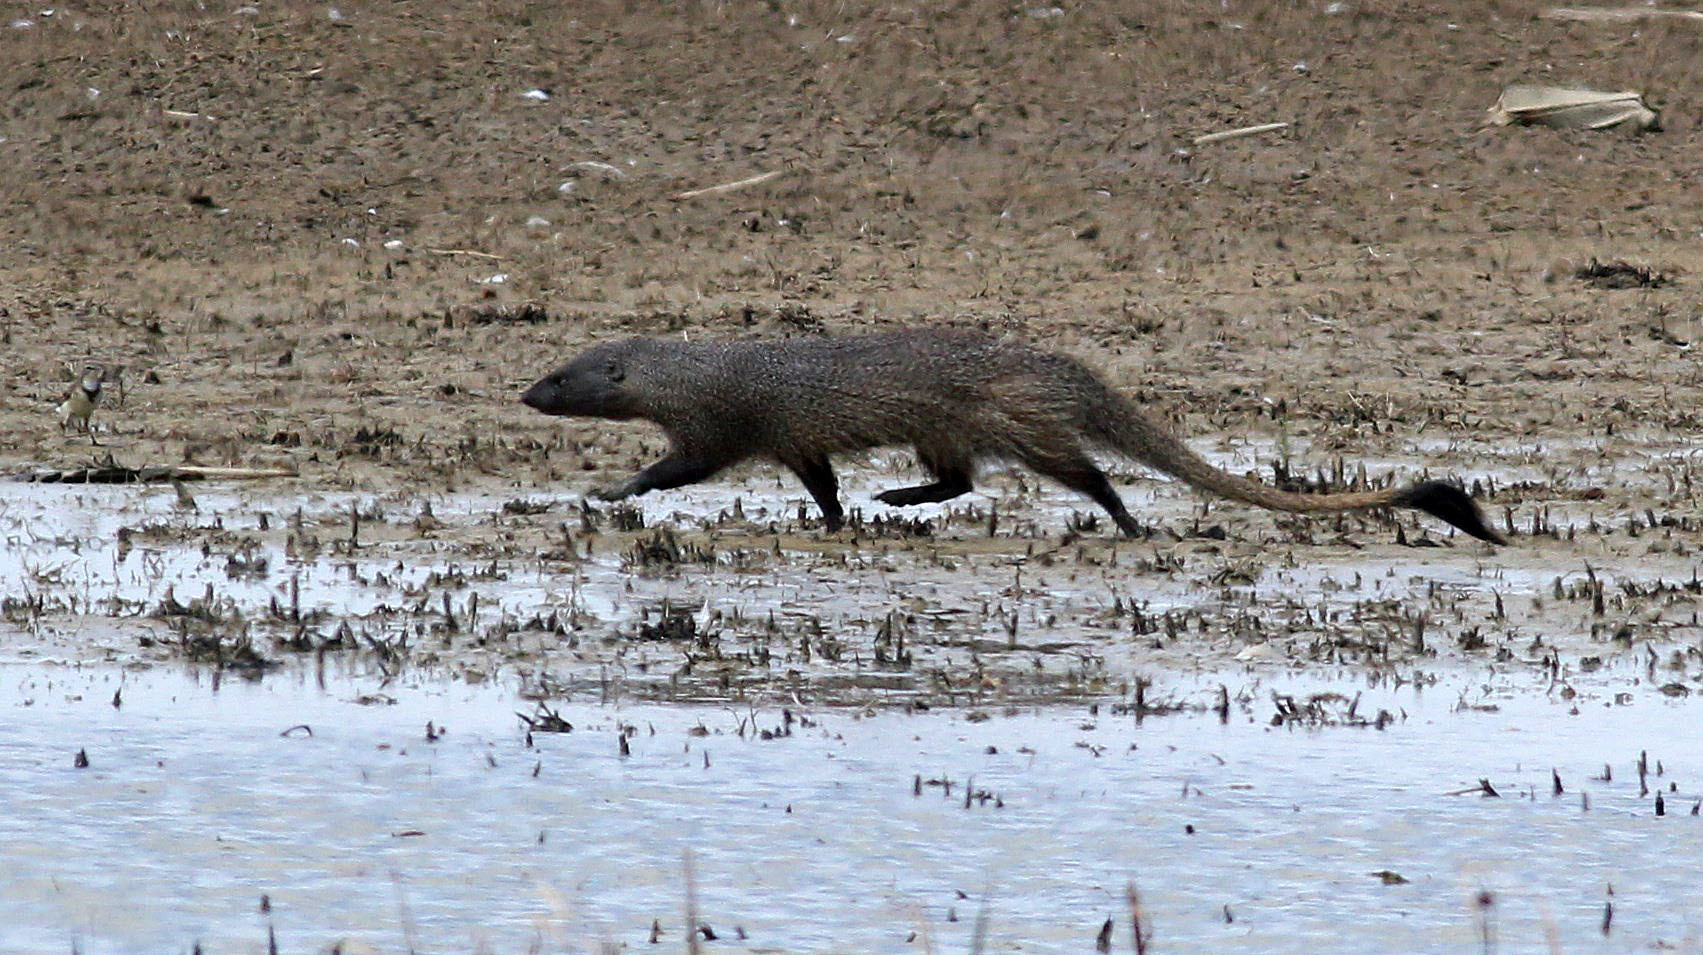 Image of Egyptian Mongoose